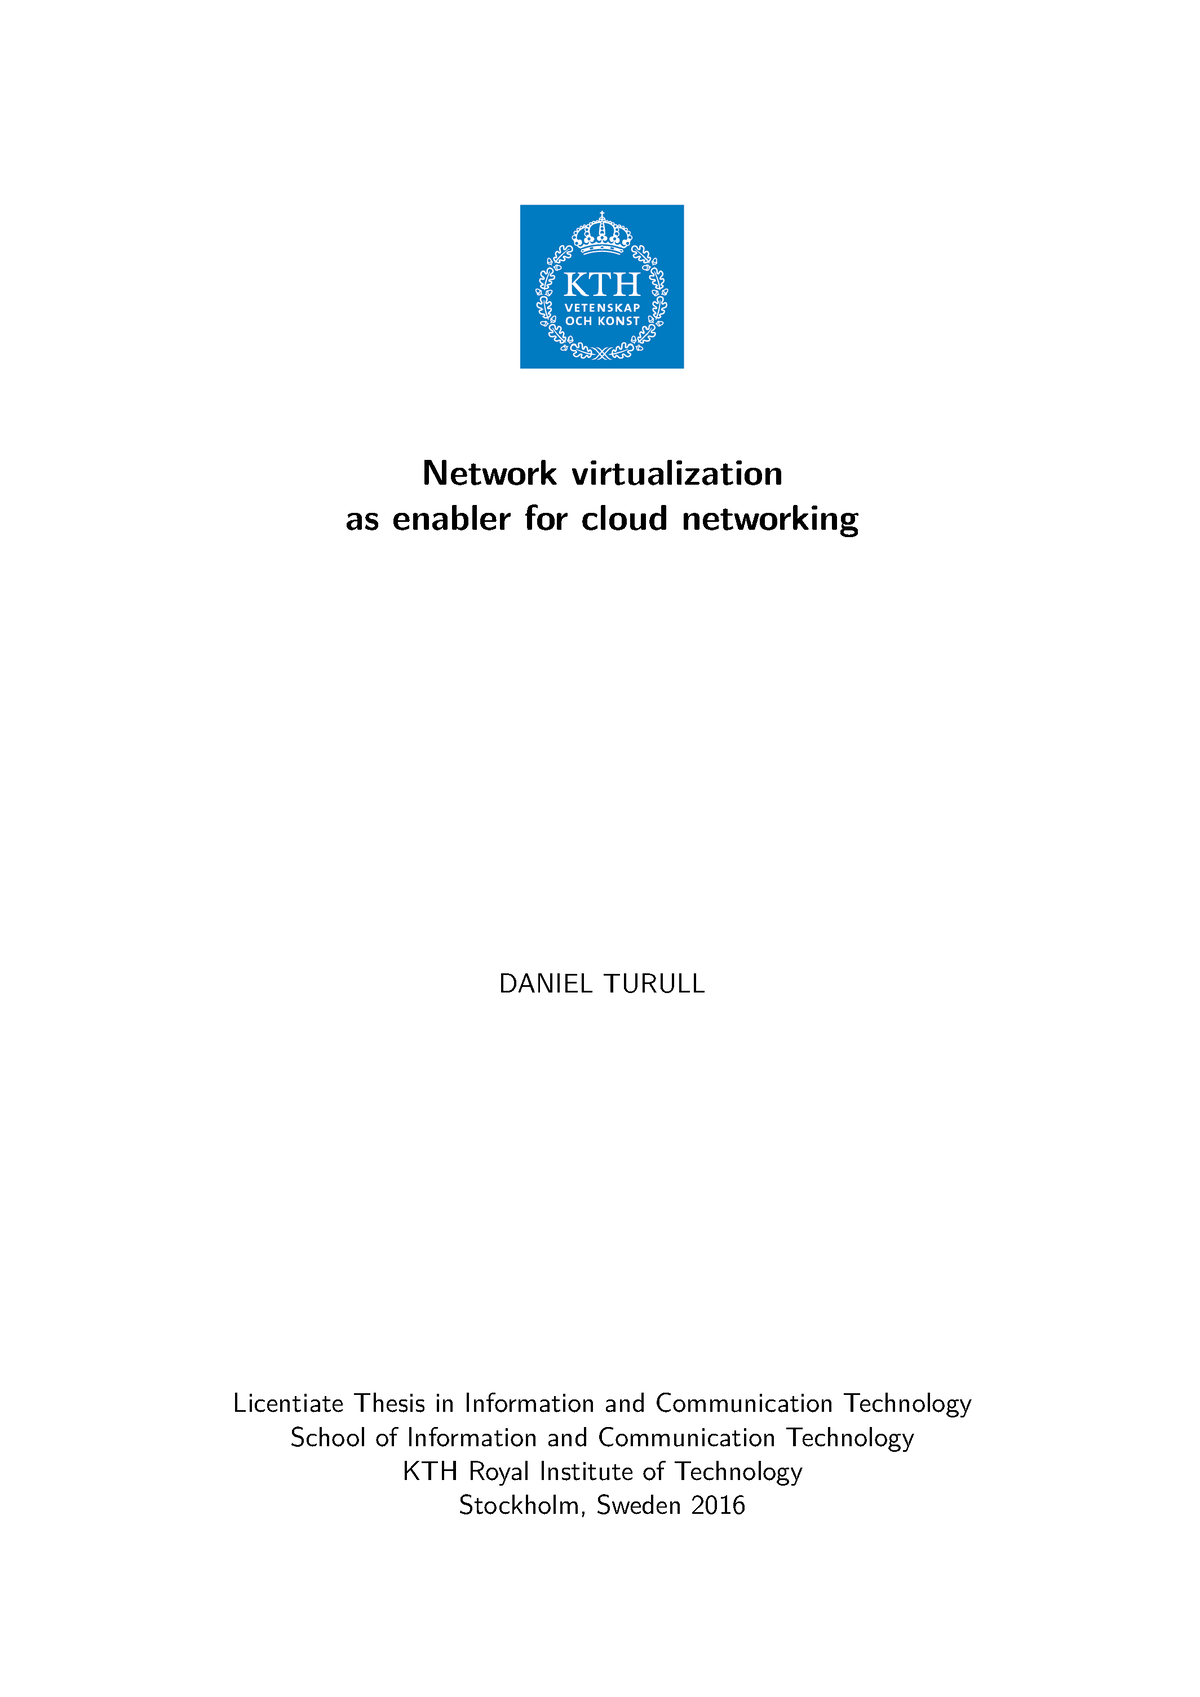 virtualization master thesis